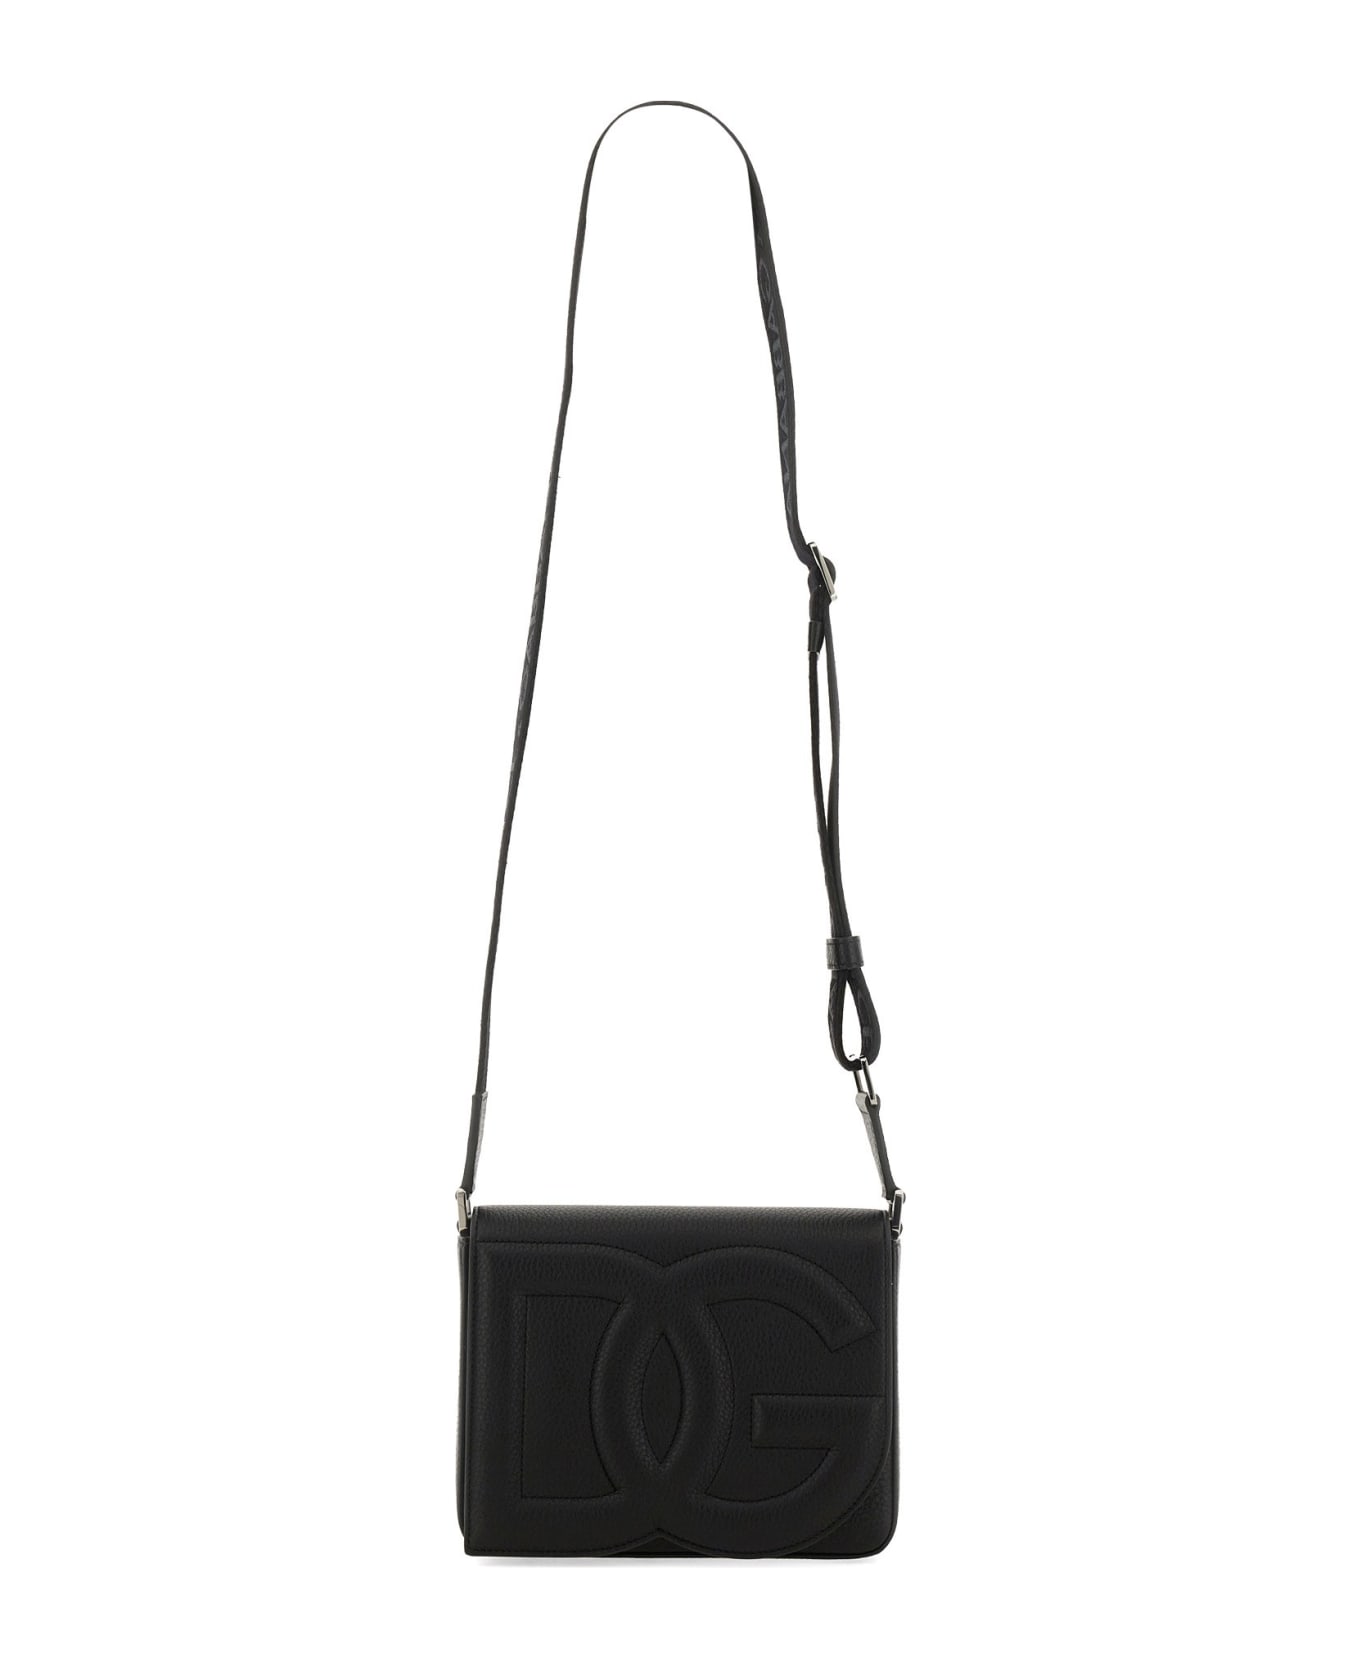 Dolce & Gabbana Medium Leather Shoulder Bag - NERO